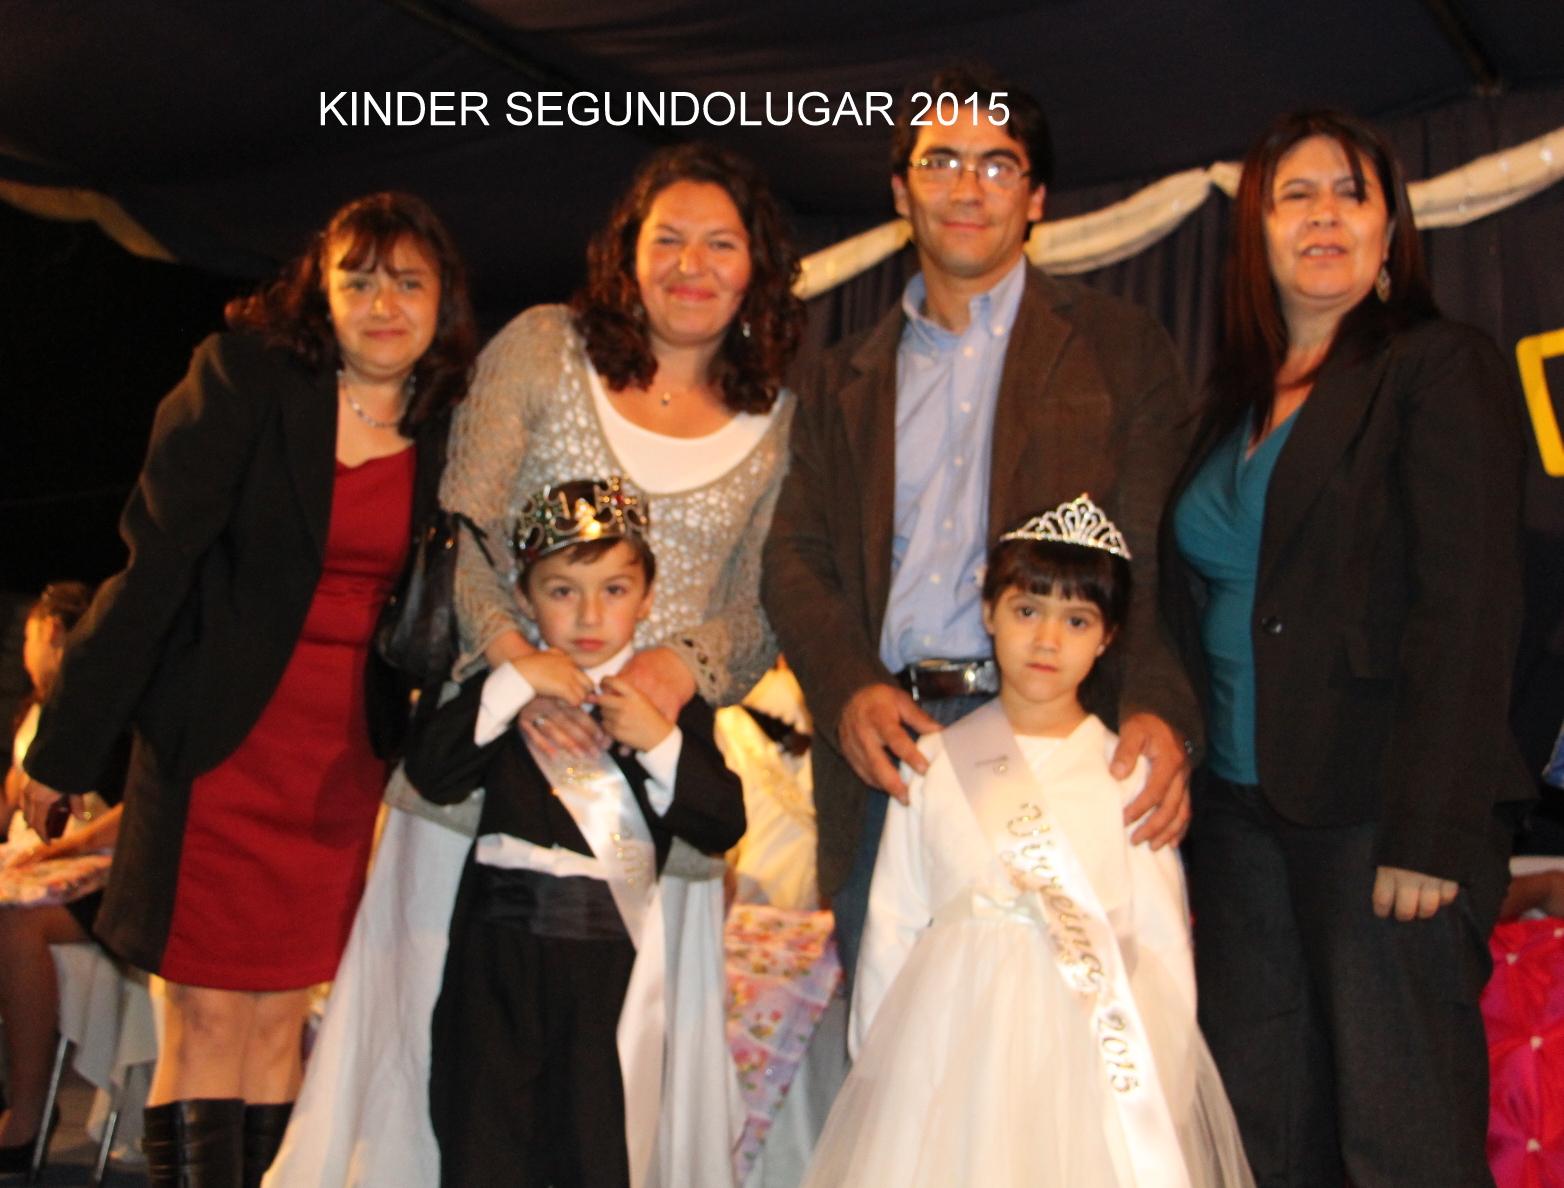 KINDER 2015 SEGUNDO LUGAR